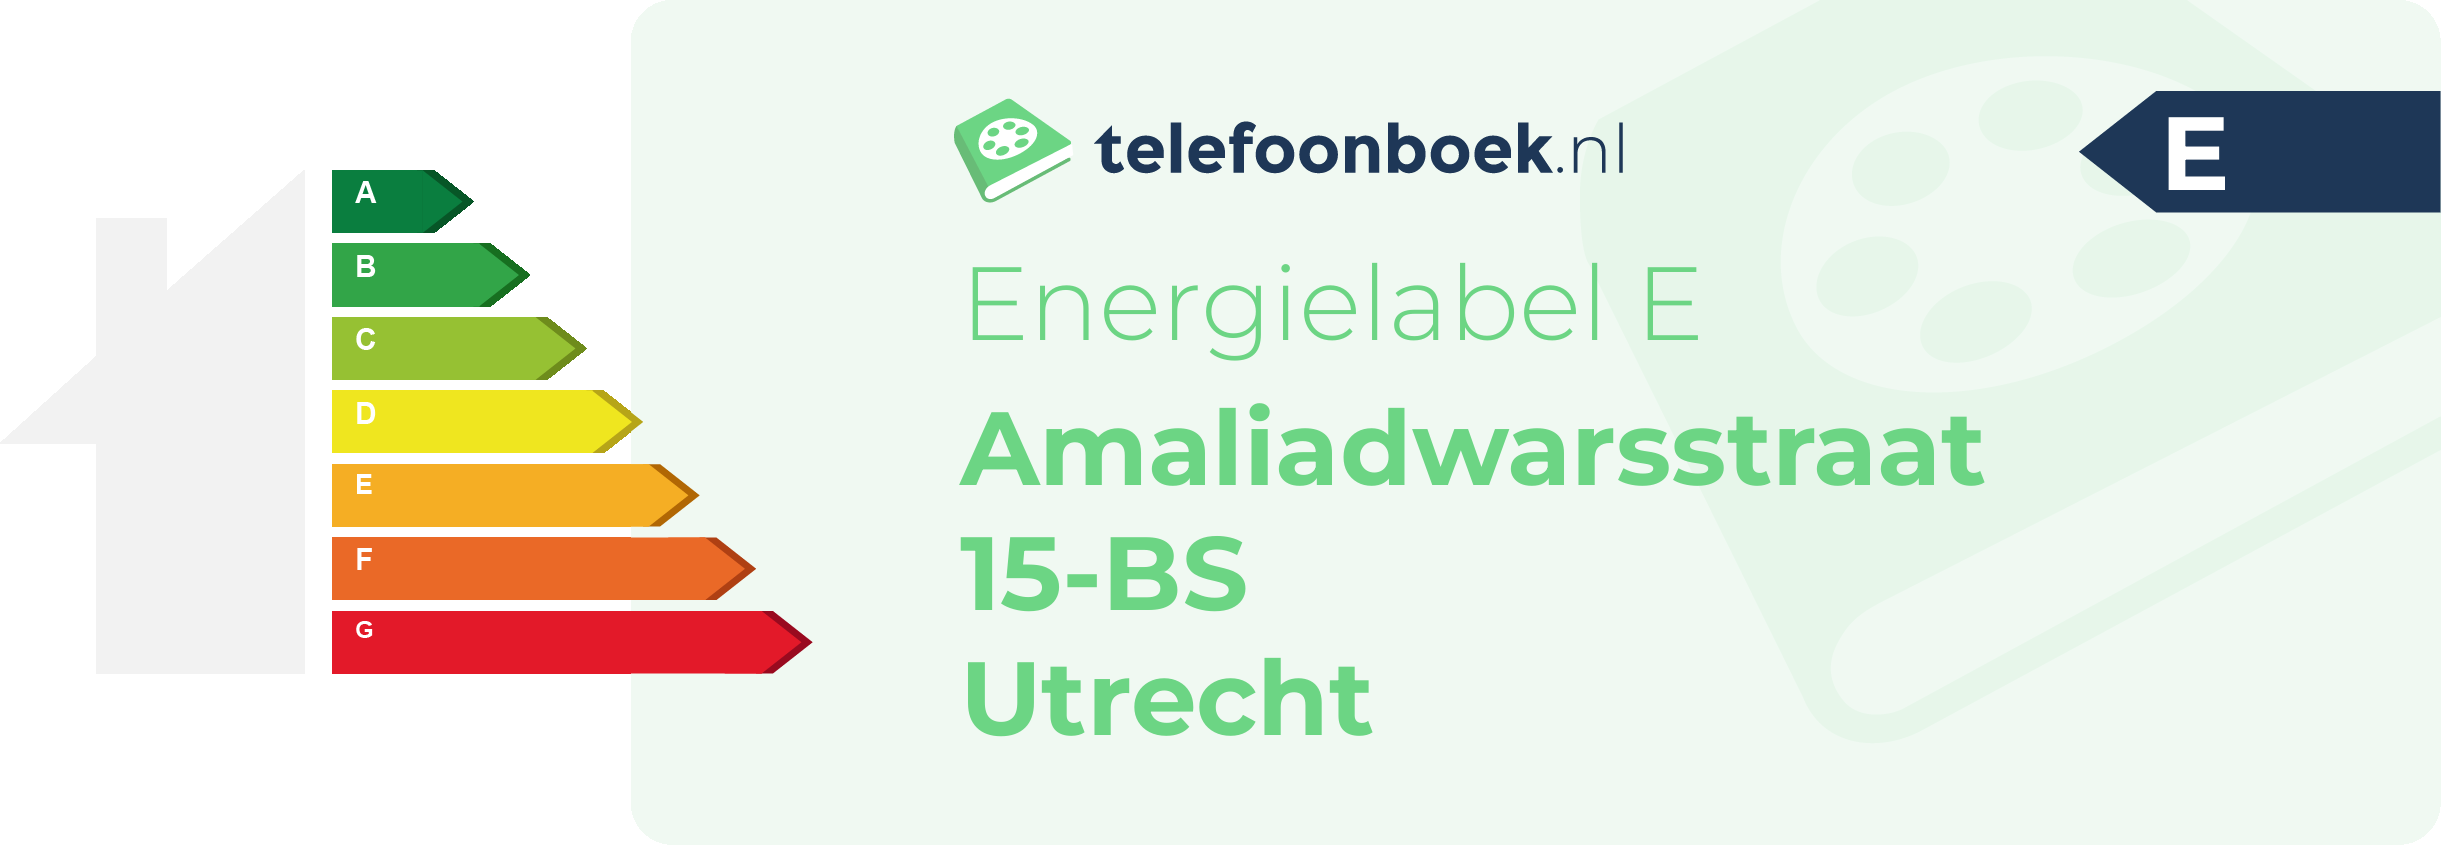 Energielabel Amaliadwarsstraat 15-BS Utrecht